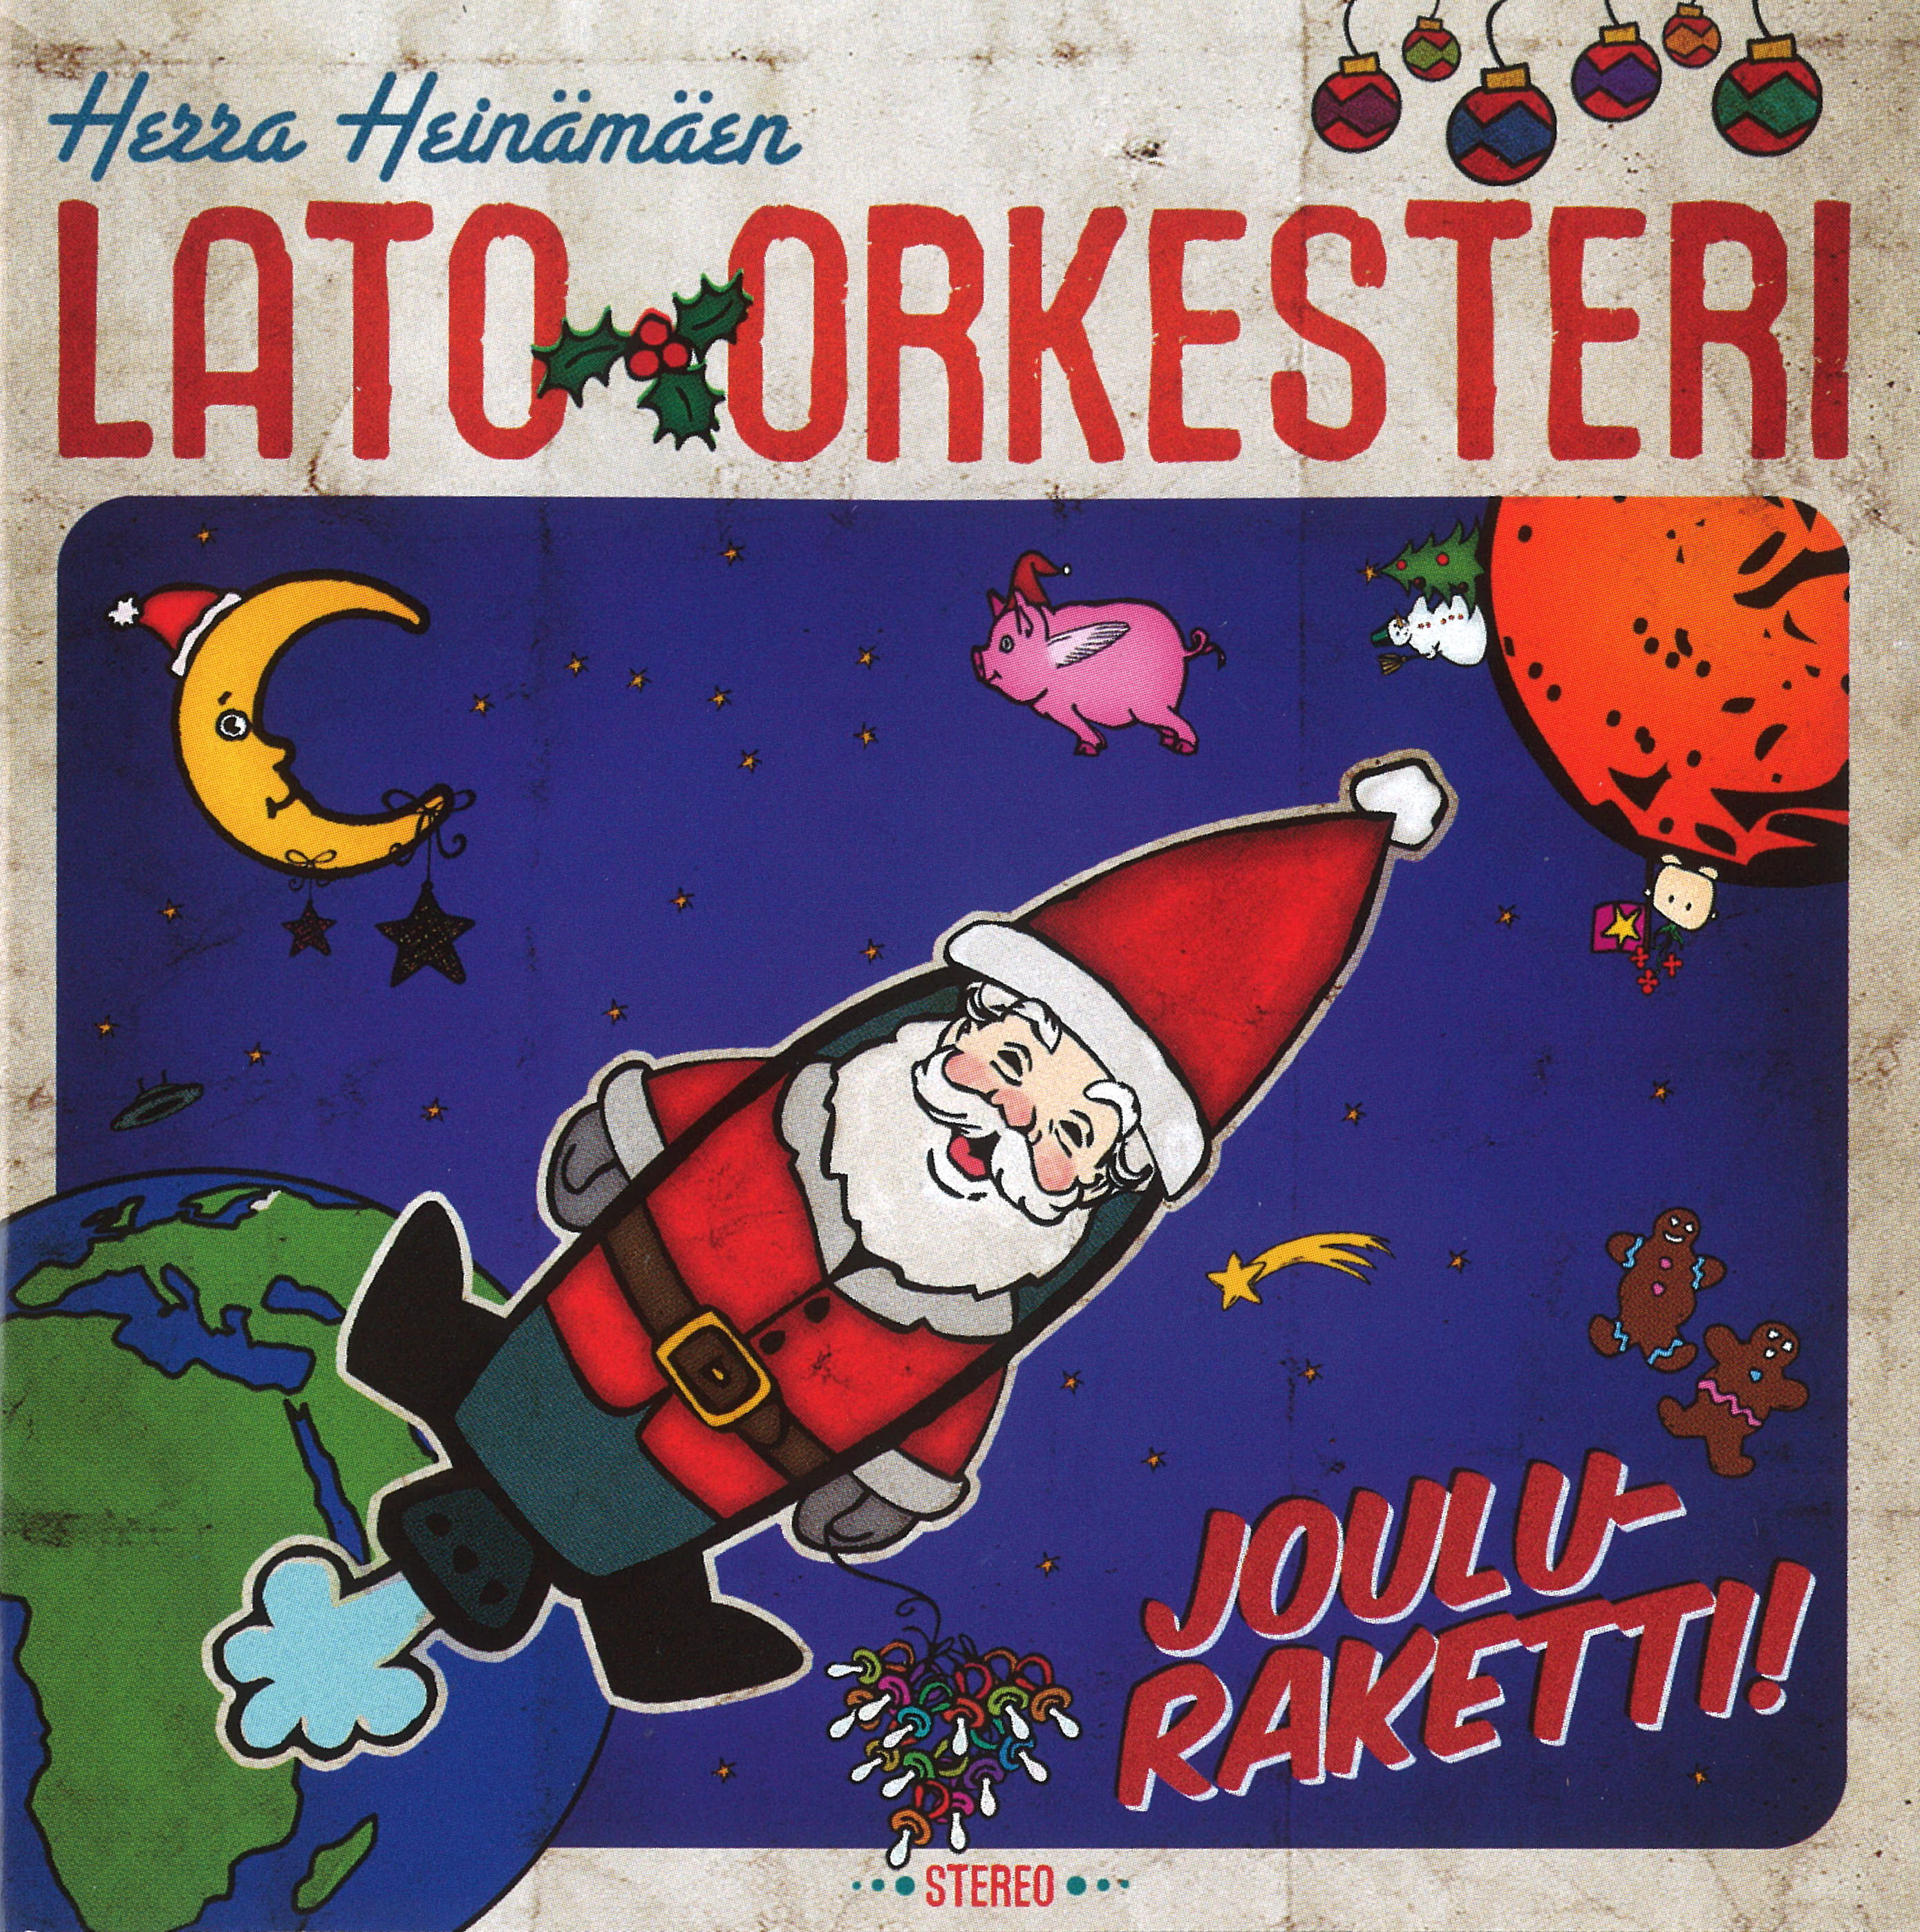 Herra Hein m en Lato-orkesteri - Jouluraketti - CD